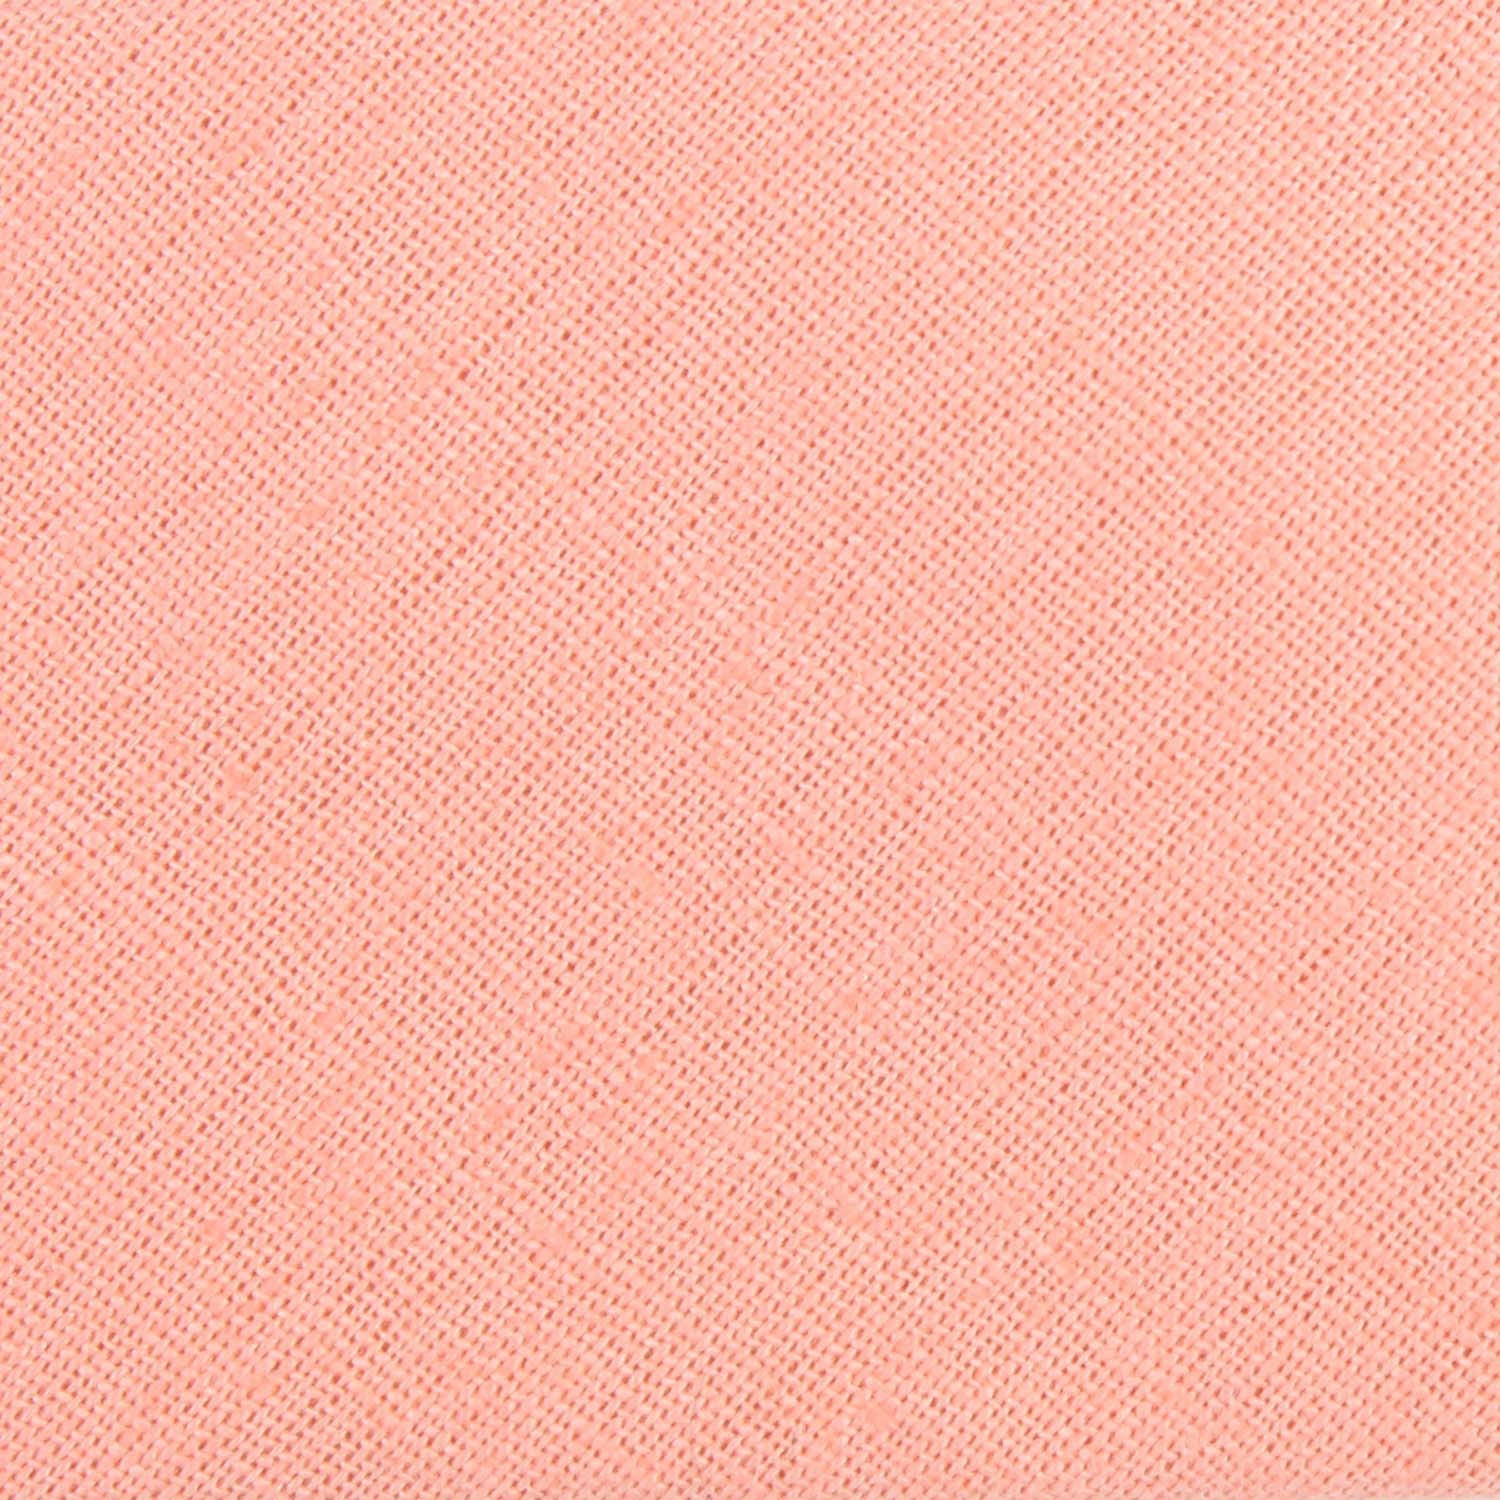 Apricot Peach Slub Linen Fabric Skinny Tie L167